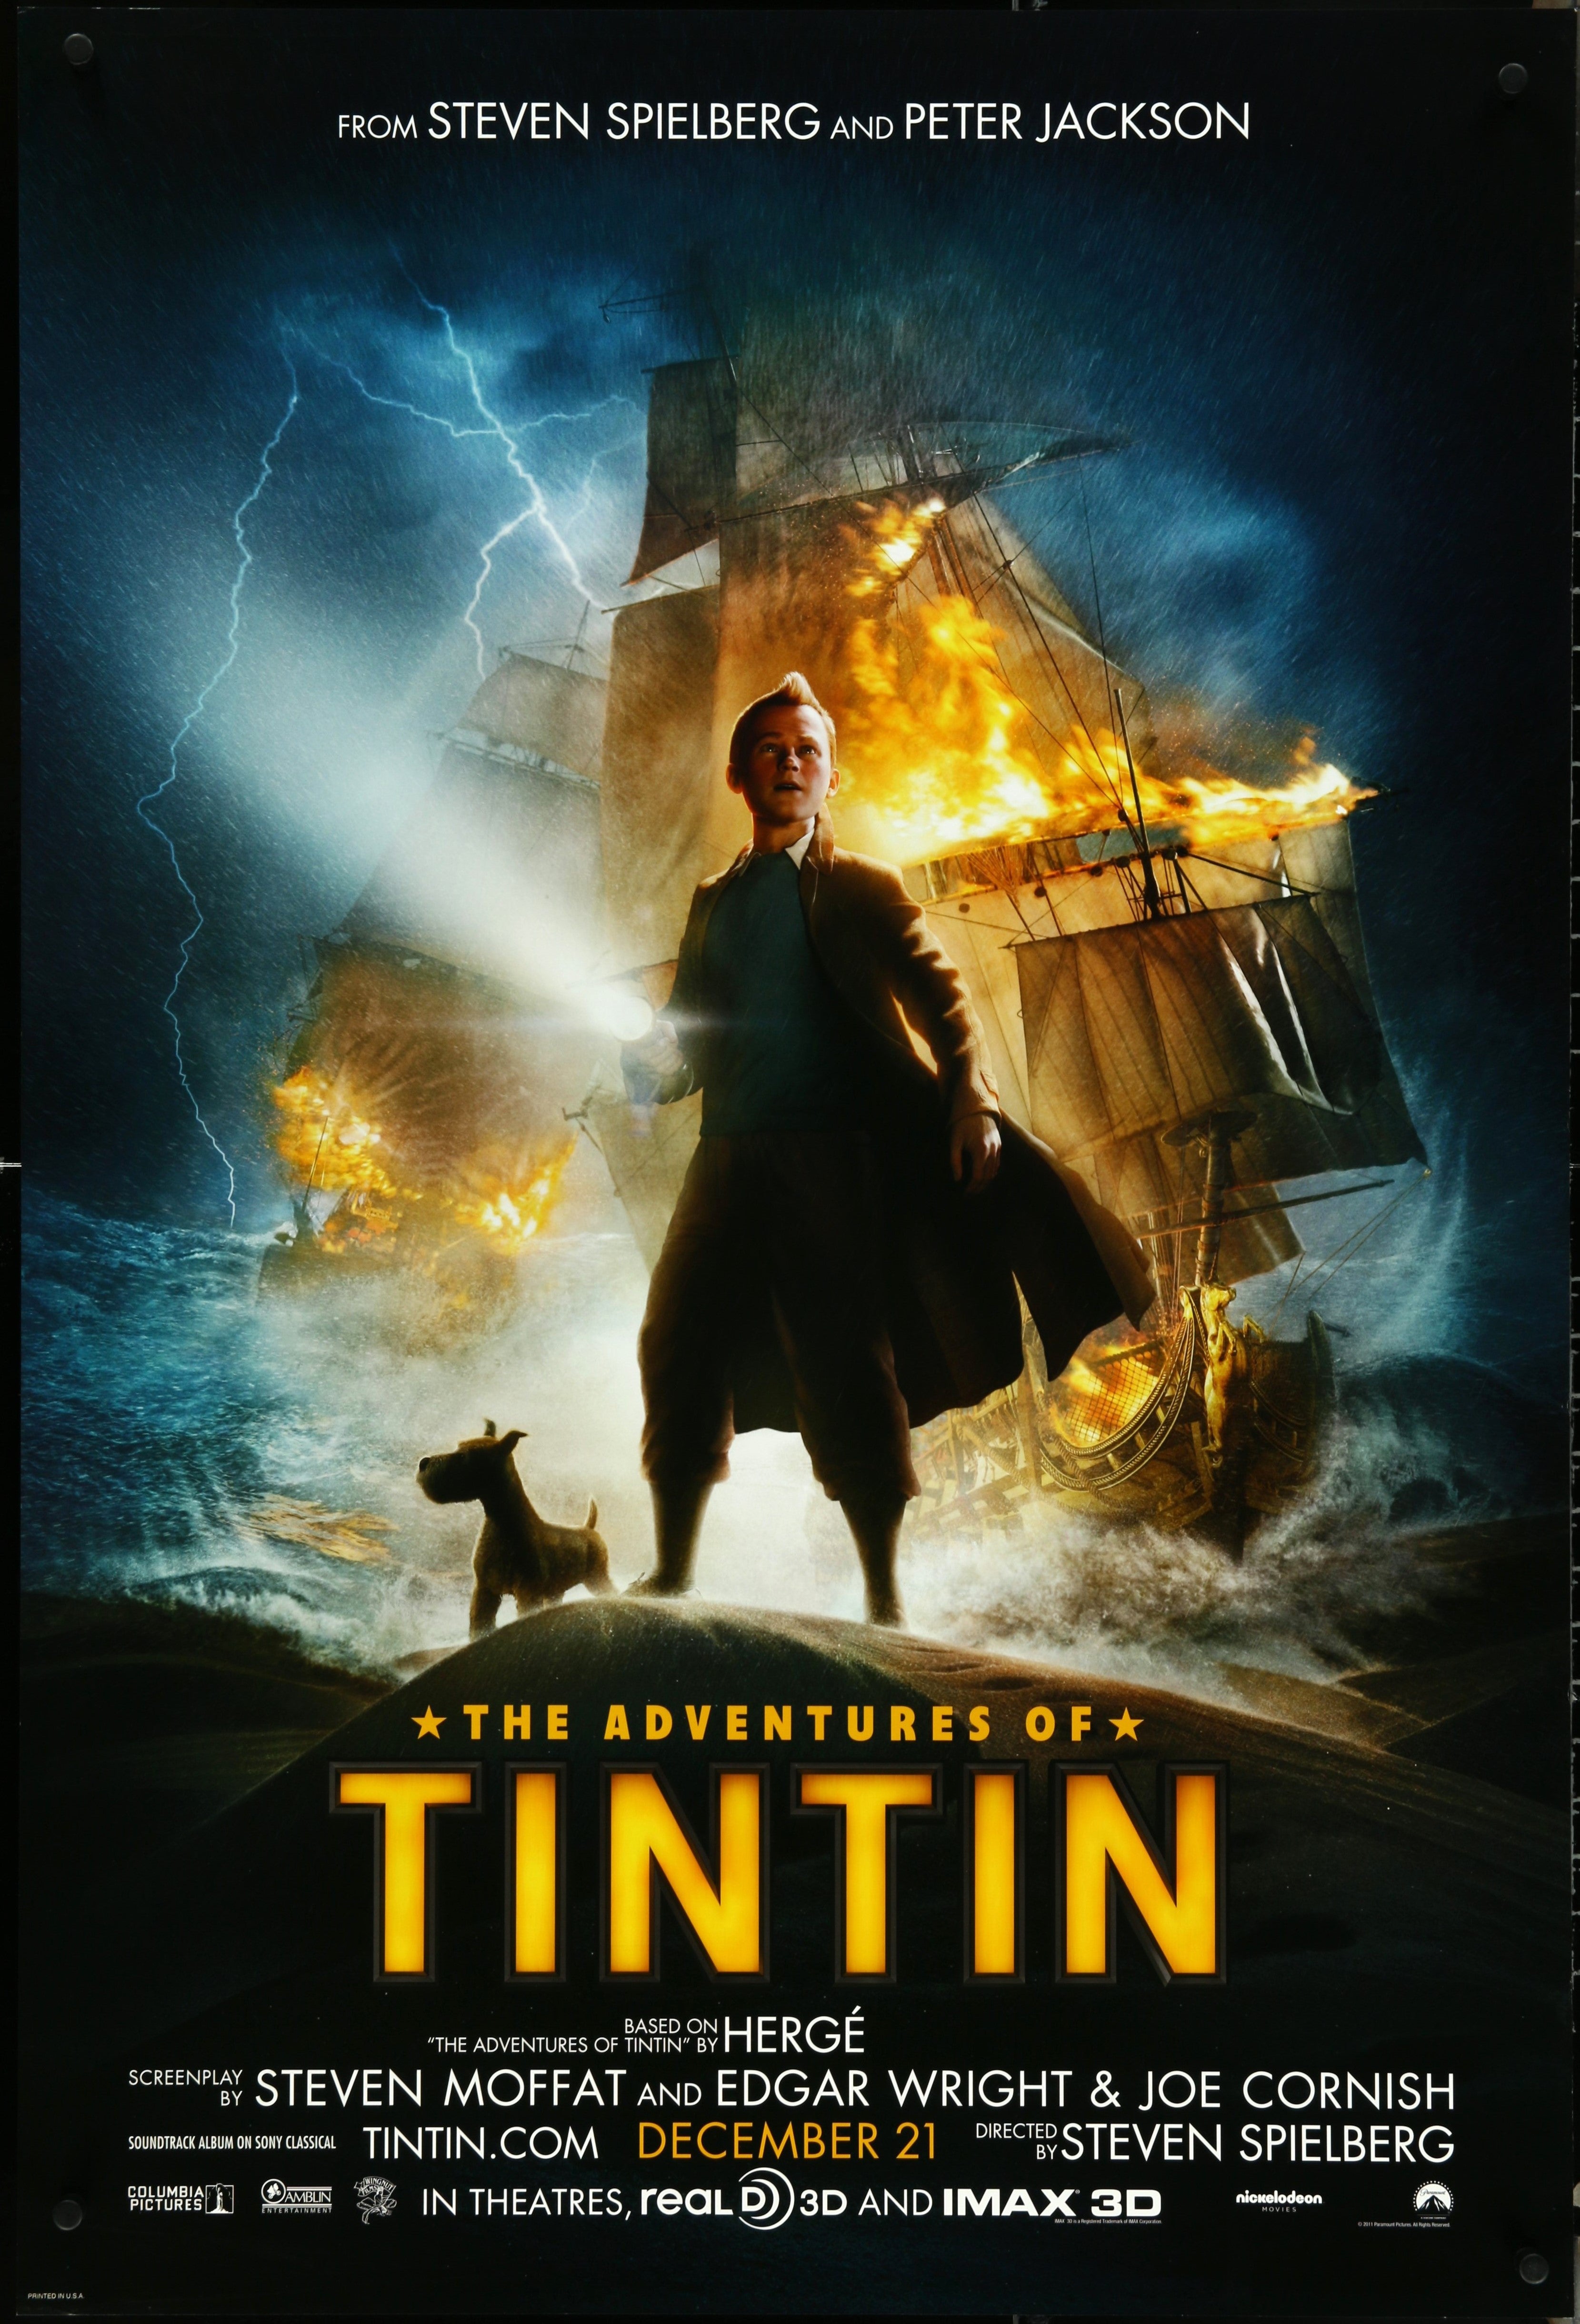 THE ADVENTURES OF TINTIN (2011)